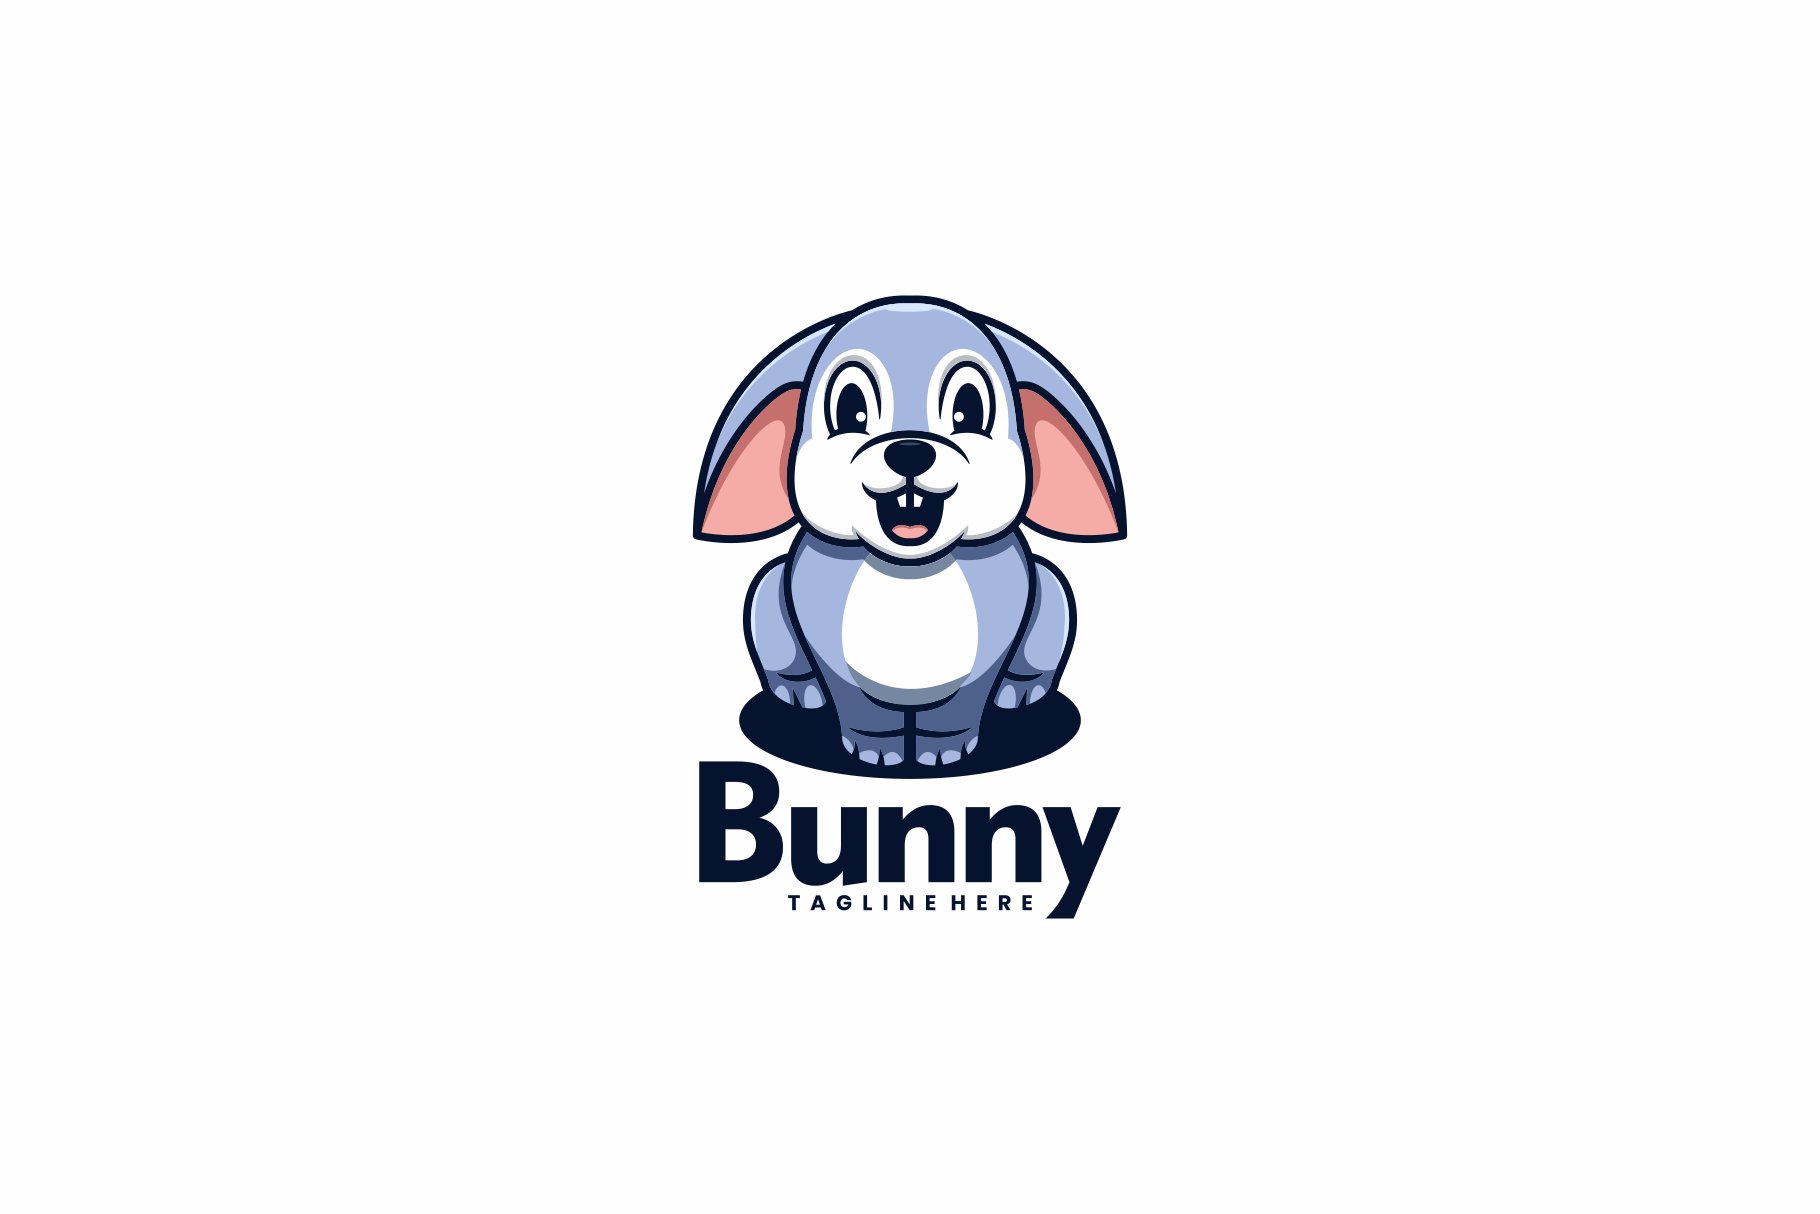 Bunny Mascot Cartoon Style. cover image.